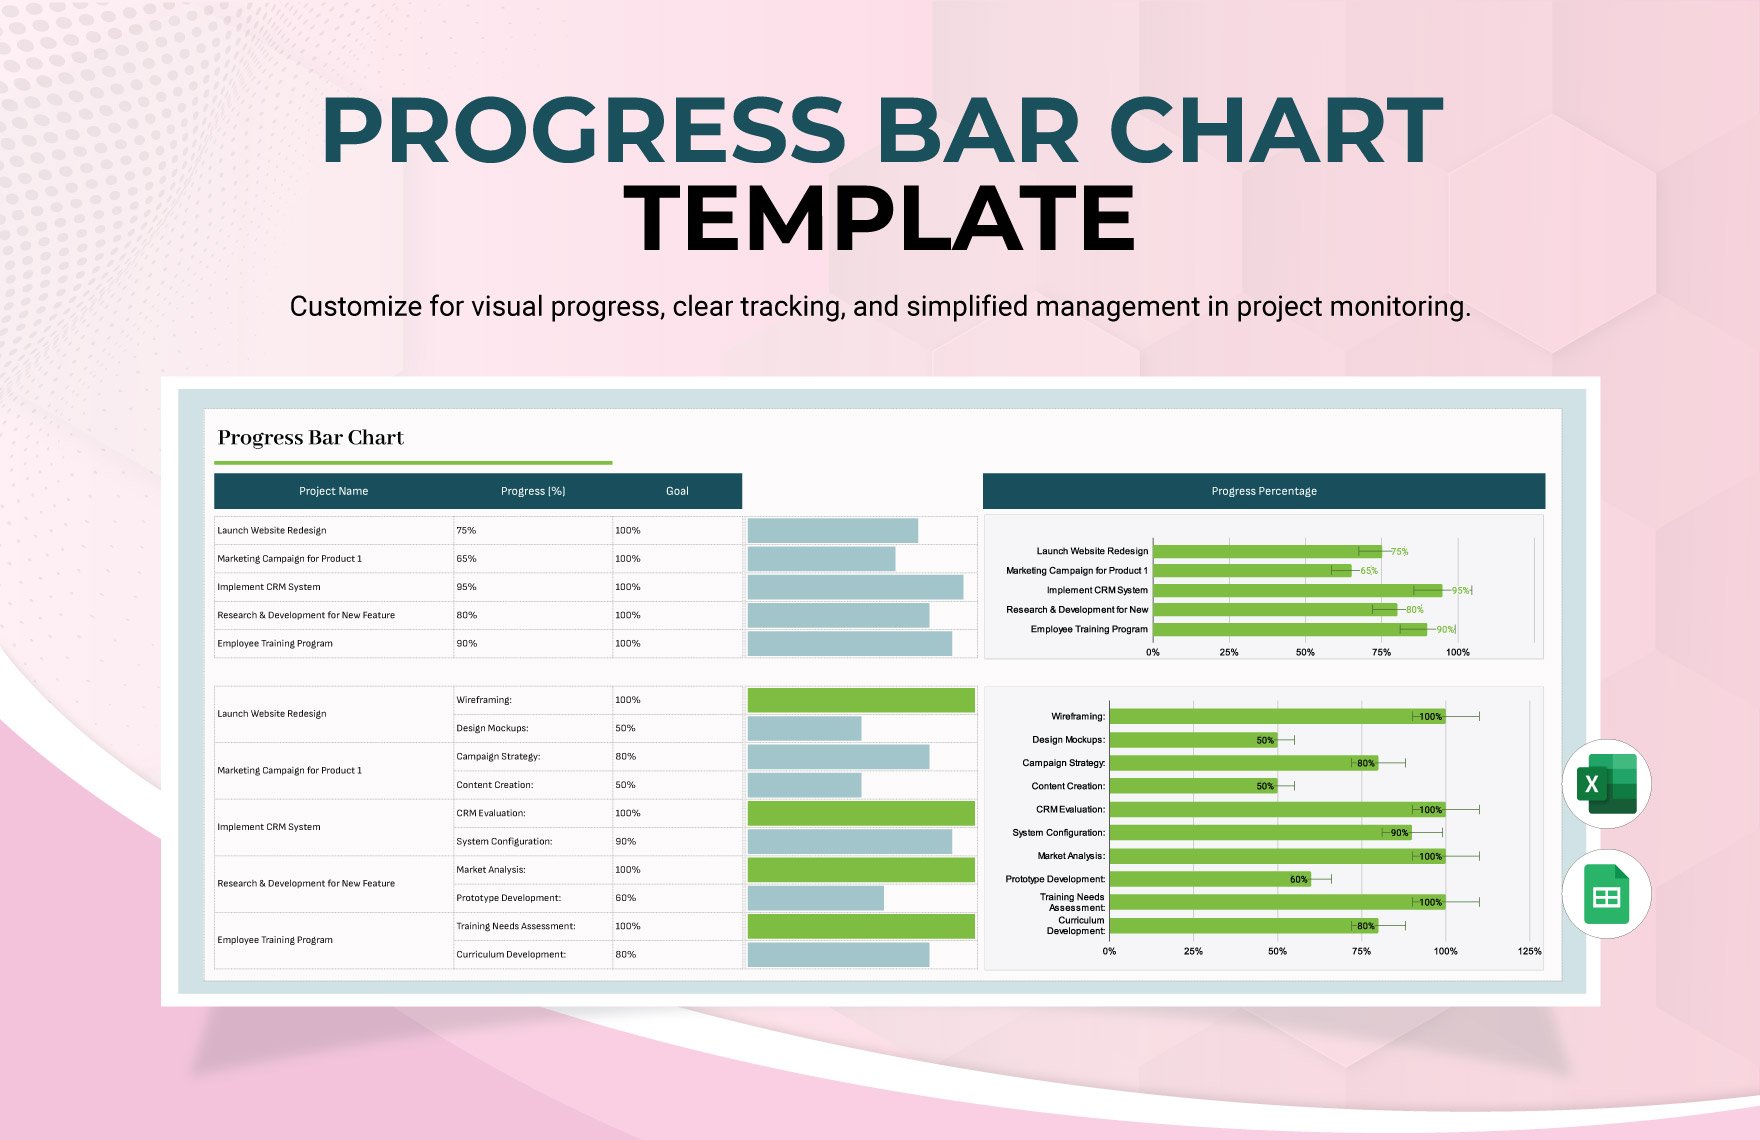 Progress Bar Chart Template in Excel, Google Sheets